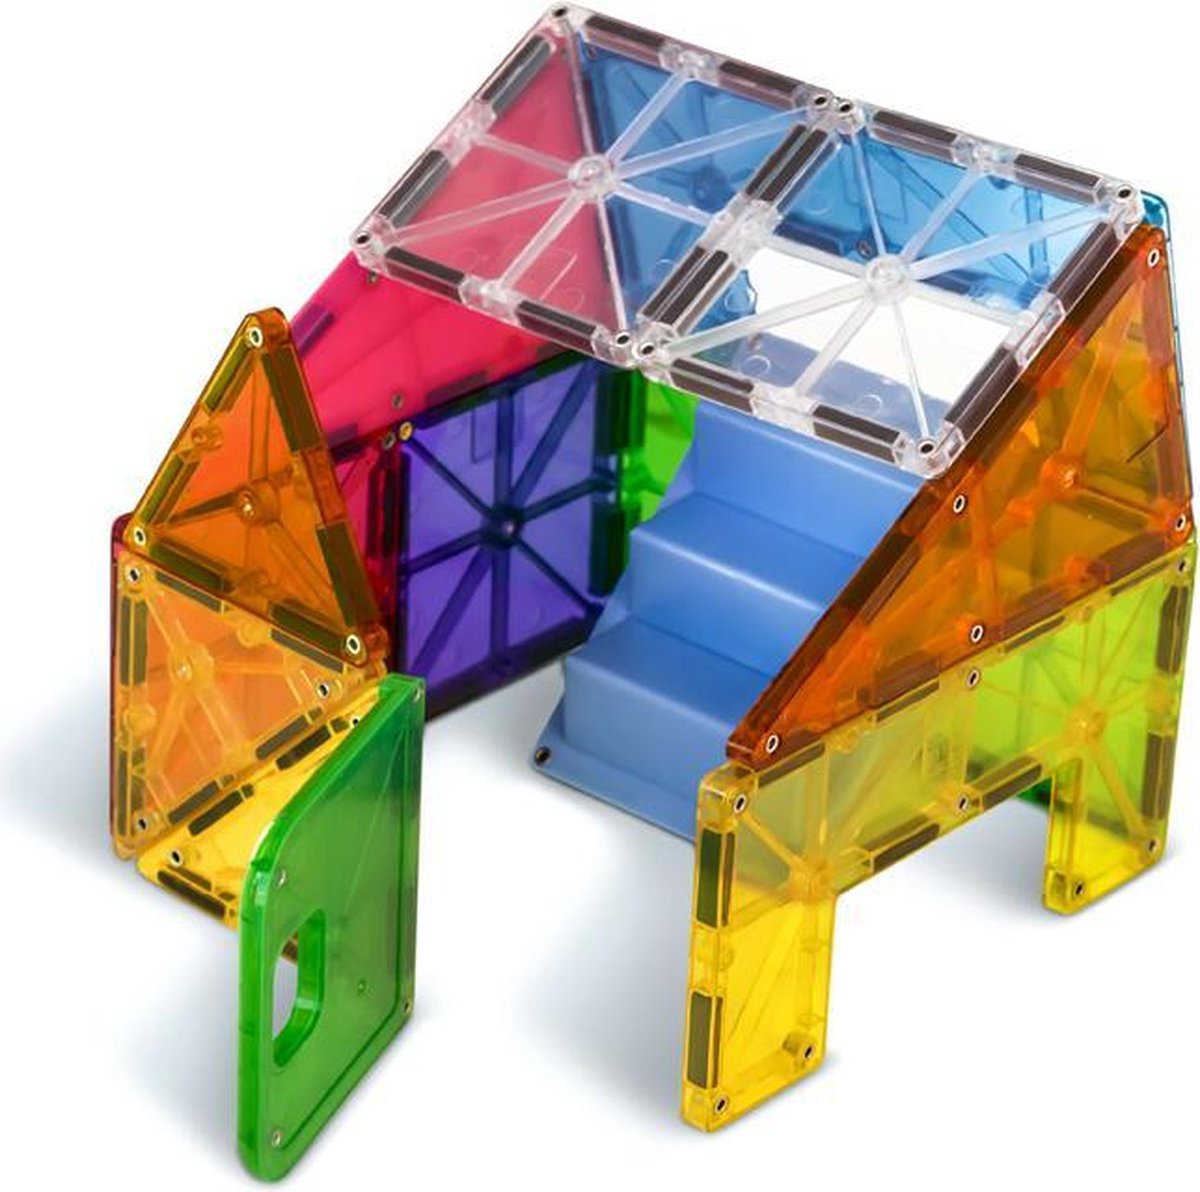 Magna Tiles - 28 stuks House Clear Colors - Constructiespeelgoed